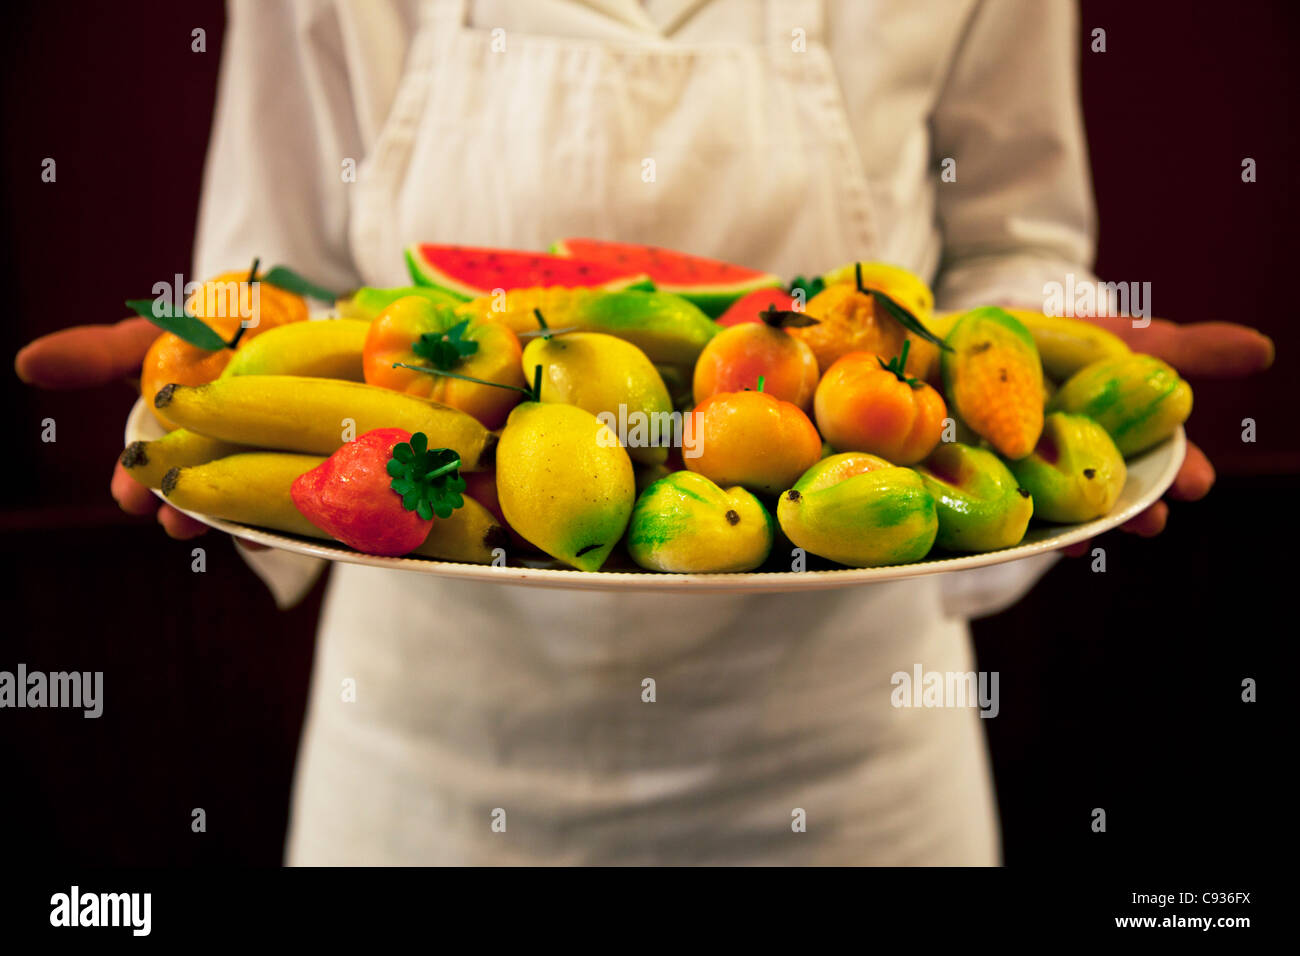 Sicily, Italy, Western Europe; 'Frutta Martorana' typical Sicilian marzipan fruits - Erice Stock Photo